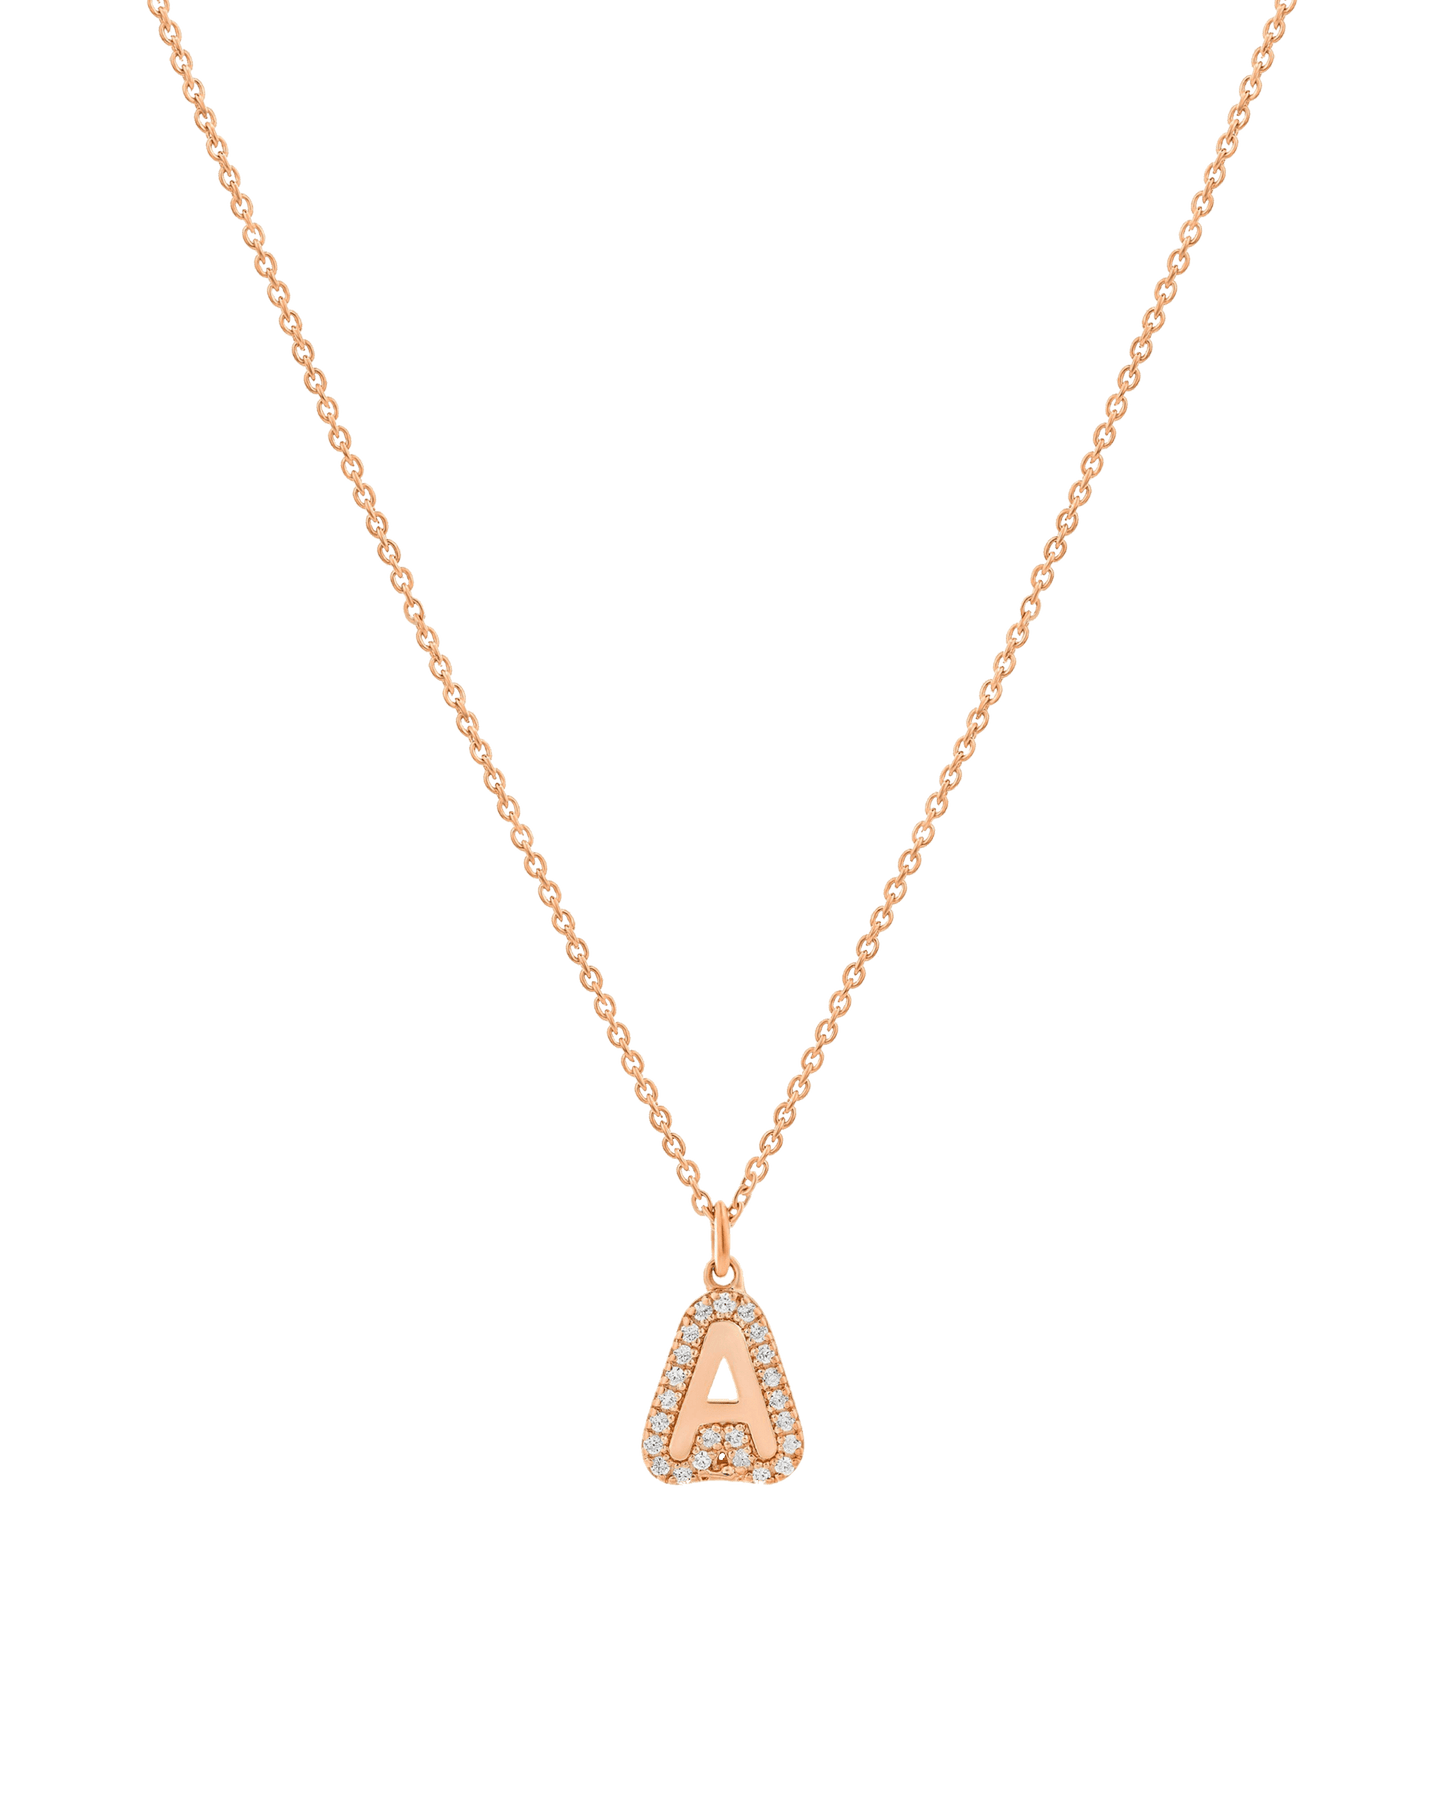 Diamond Bubble Initial Necklace - 14K Rose Gold Necklaces 14K Solid Gold Adjustable 16-17" (40cm-43cm) 